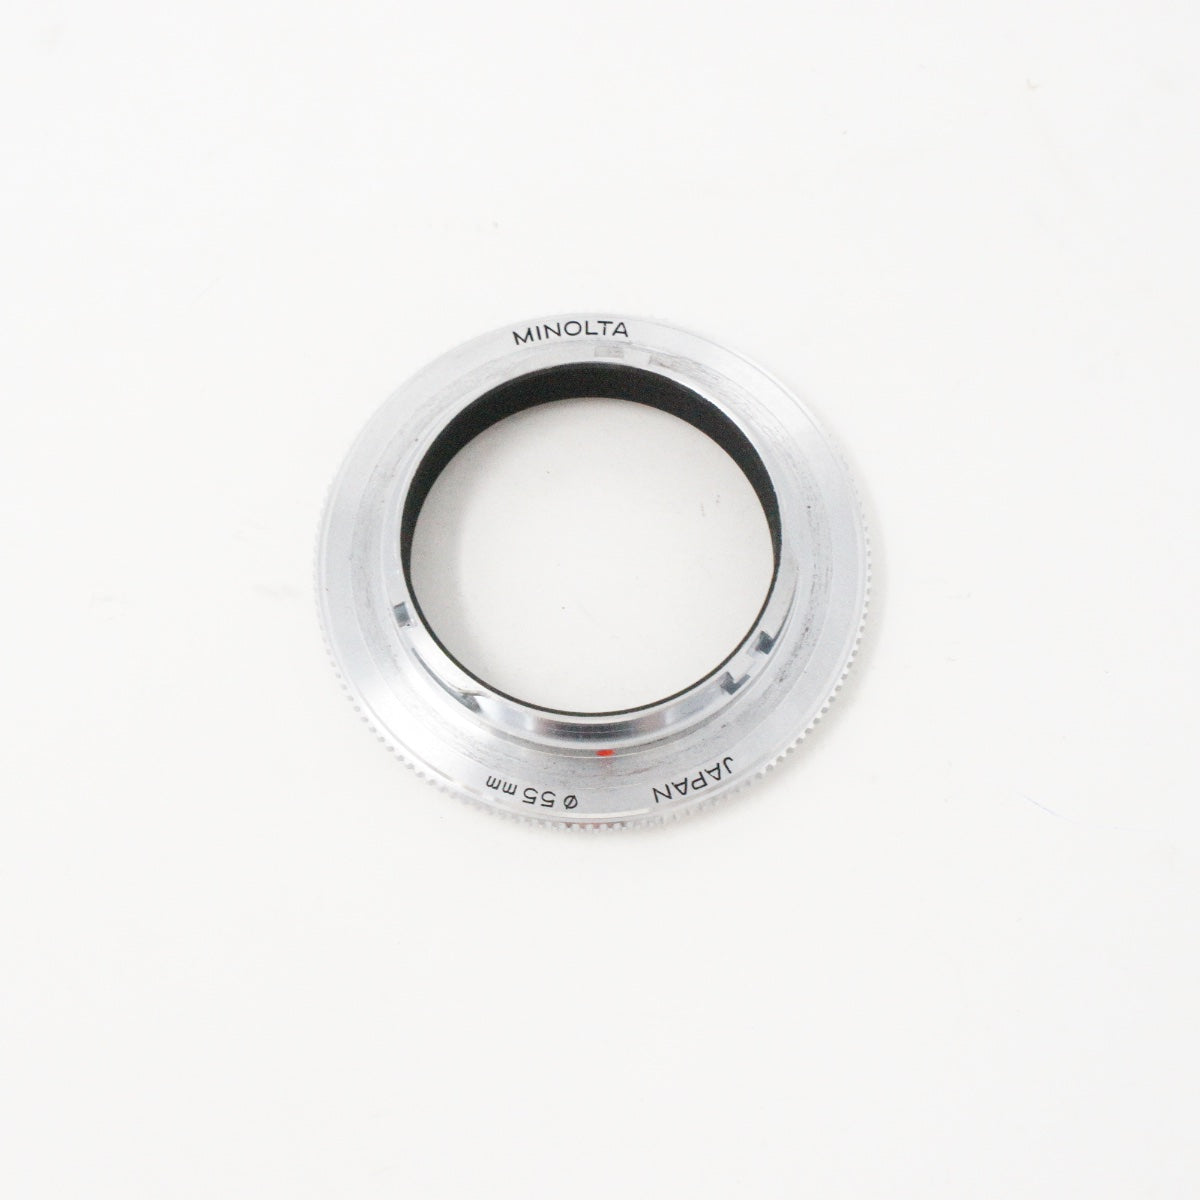 Used Minolta Reverse Ring II for Macro, Minolta MD